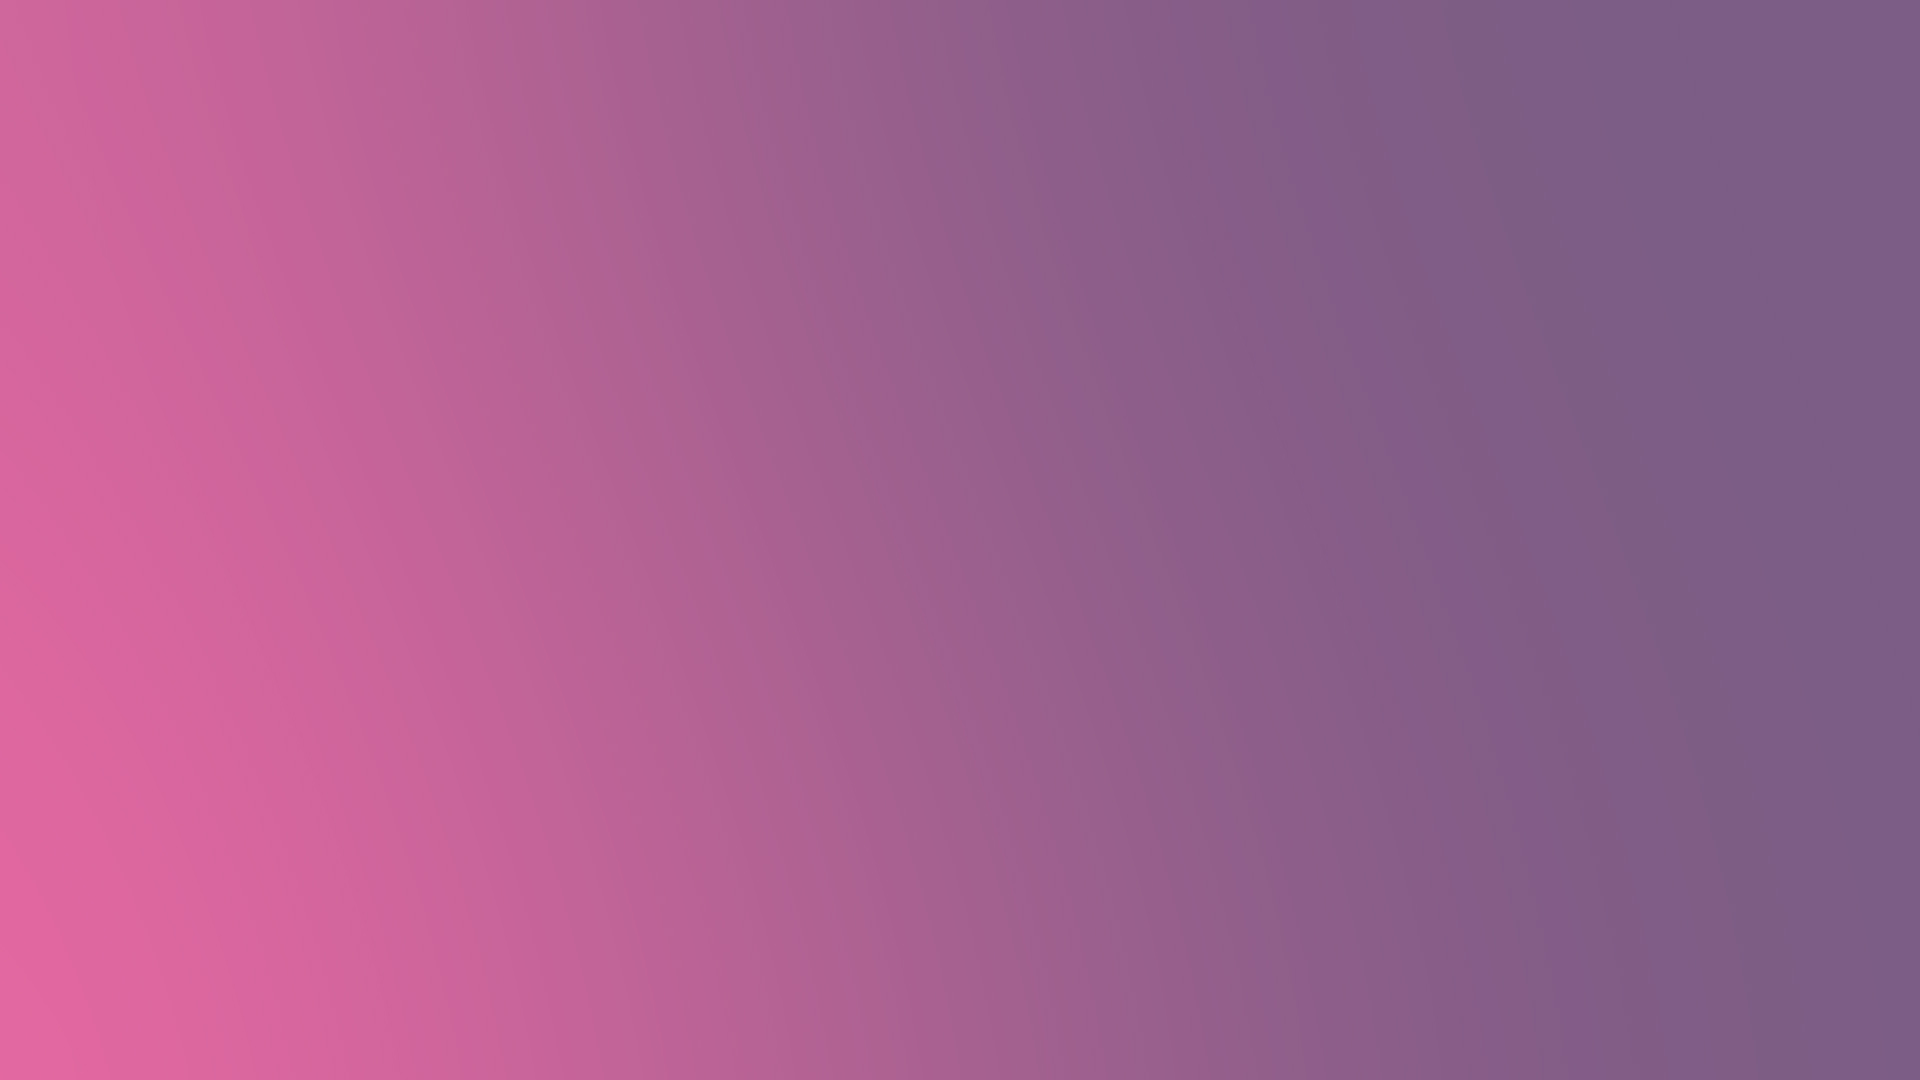 Simple Purple Gradient Desktop Wallpaper Uploaded By Xxootm